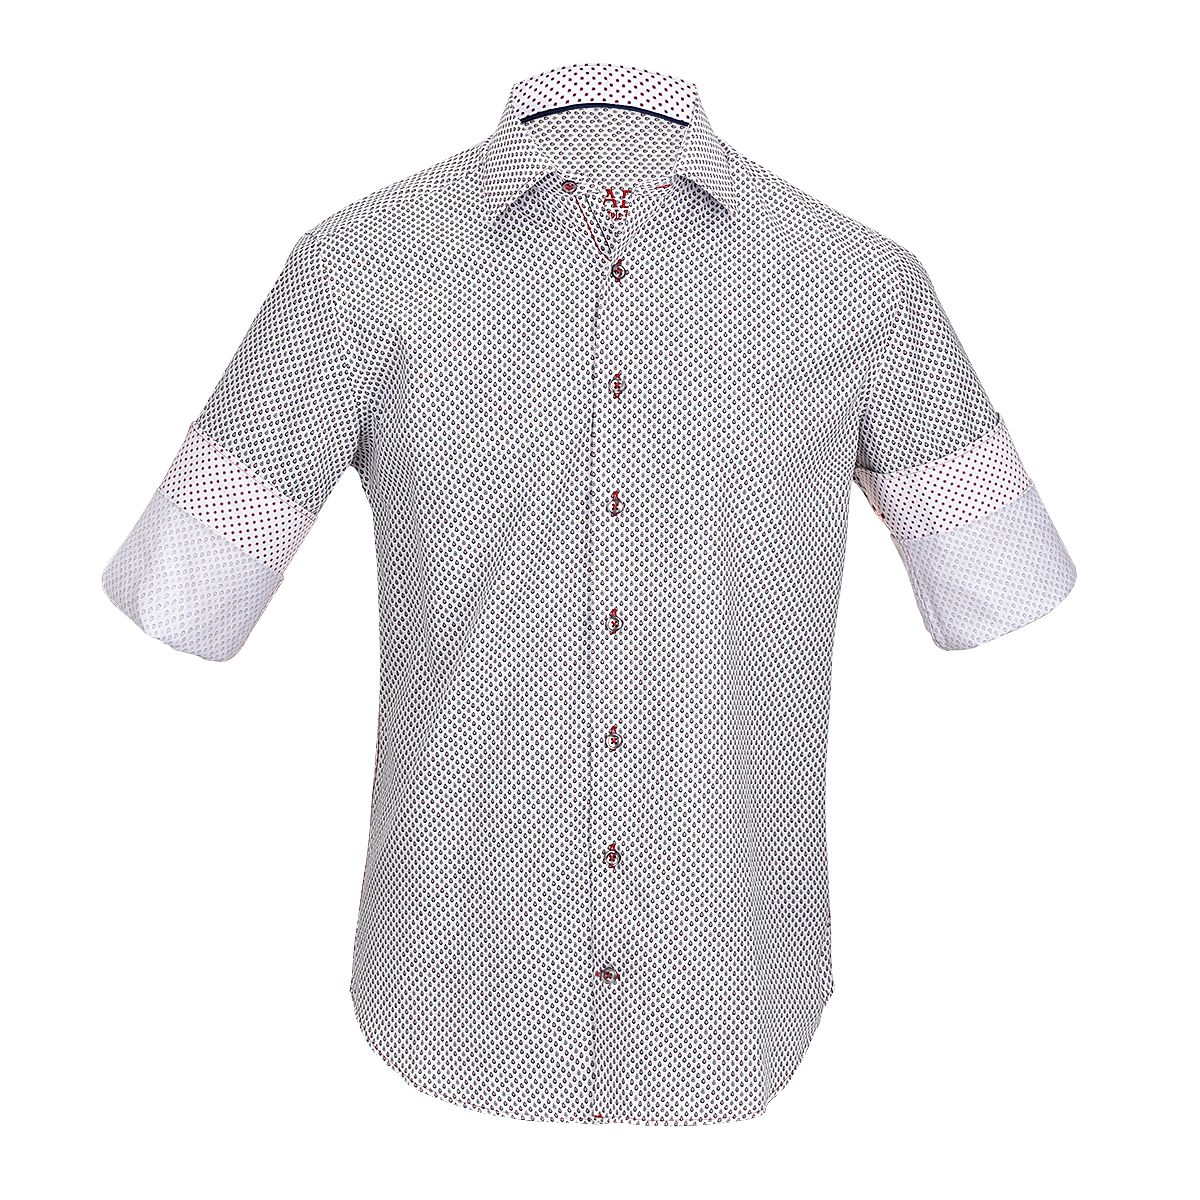 CM0W500 - Cuadra white fashion soft cotton abstract shirt for men-Kuet.us